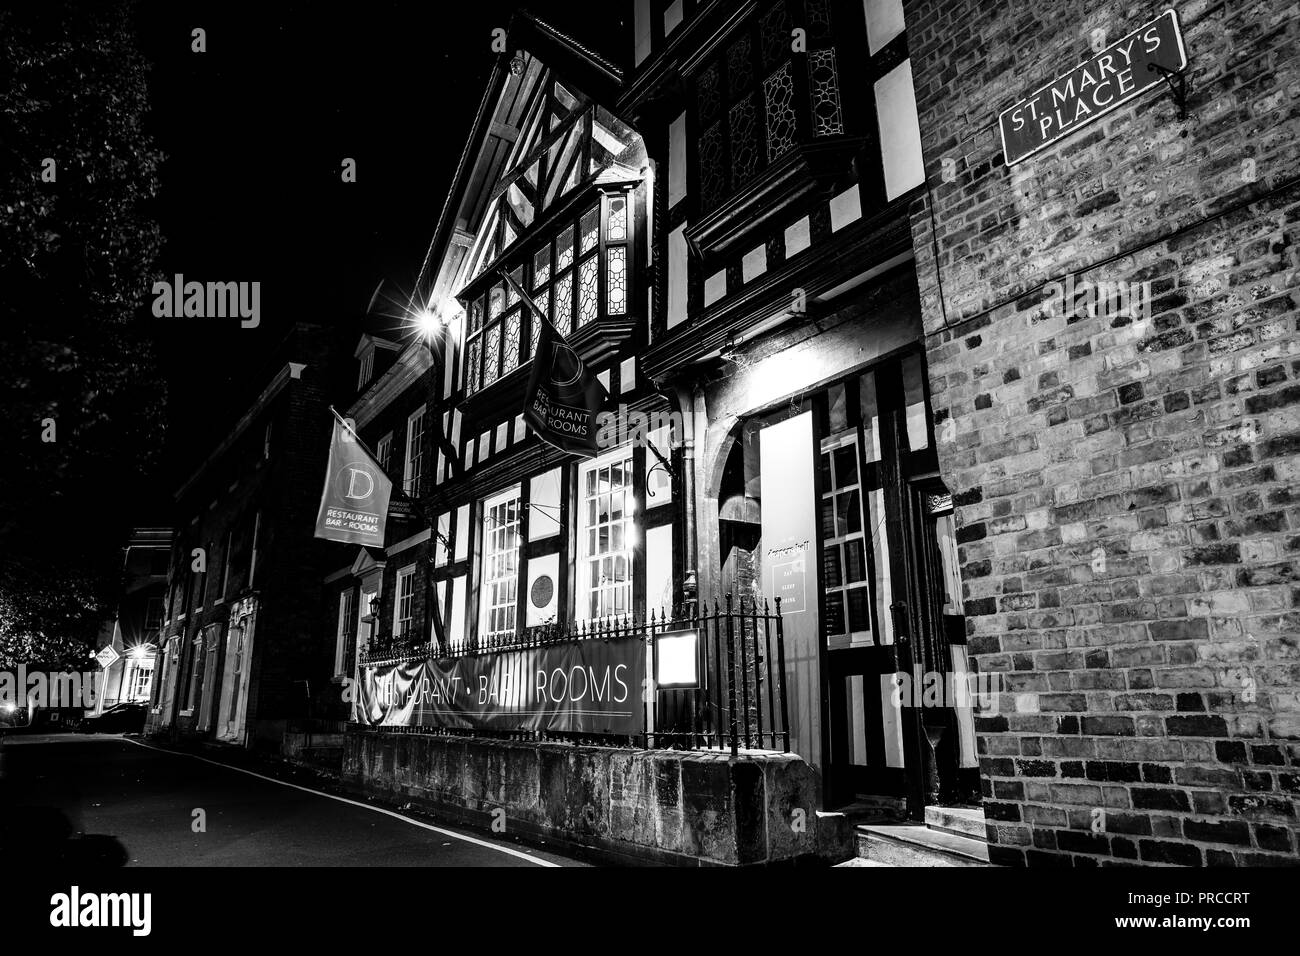 Shrewsbury at night Stock Photo